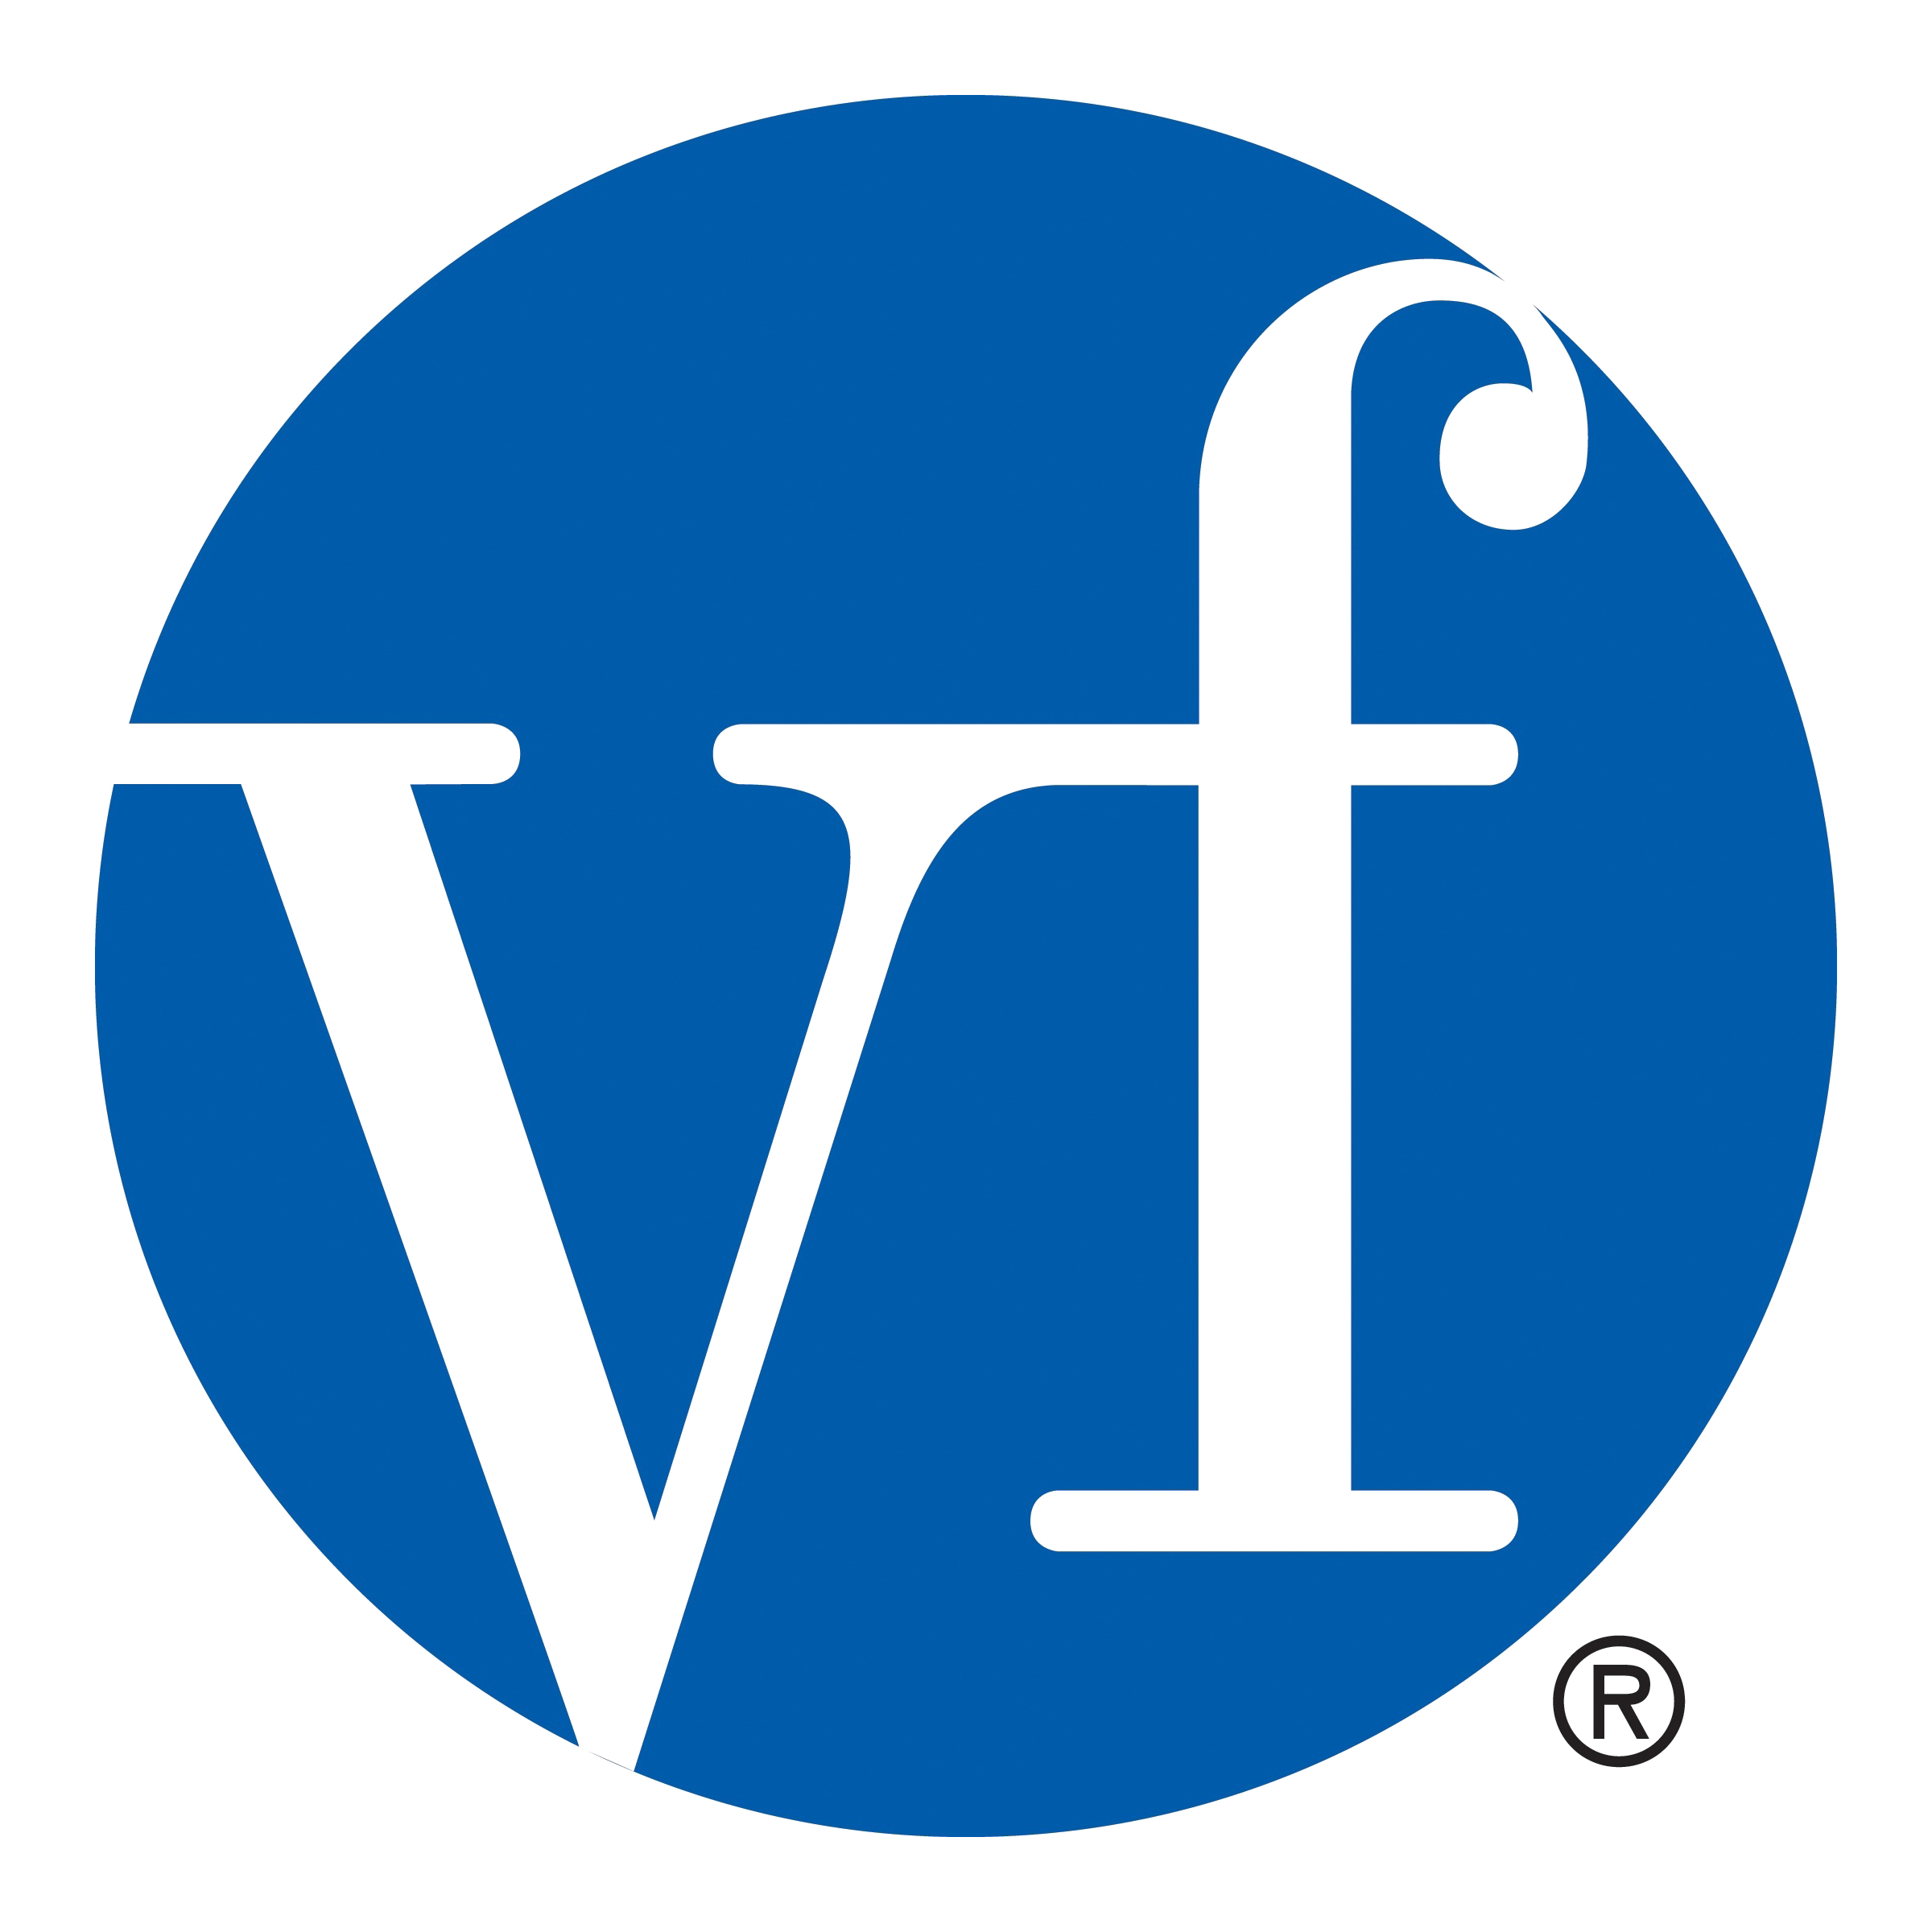 VF Logo PNG Image - PurePNG | Free transparent CC0 PNG ...